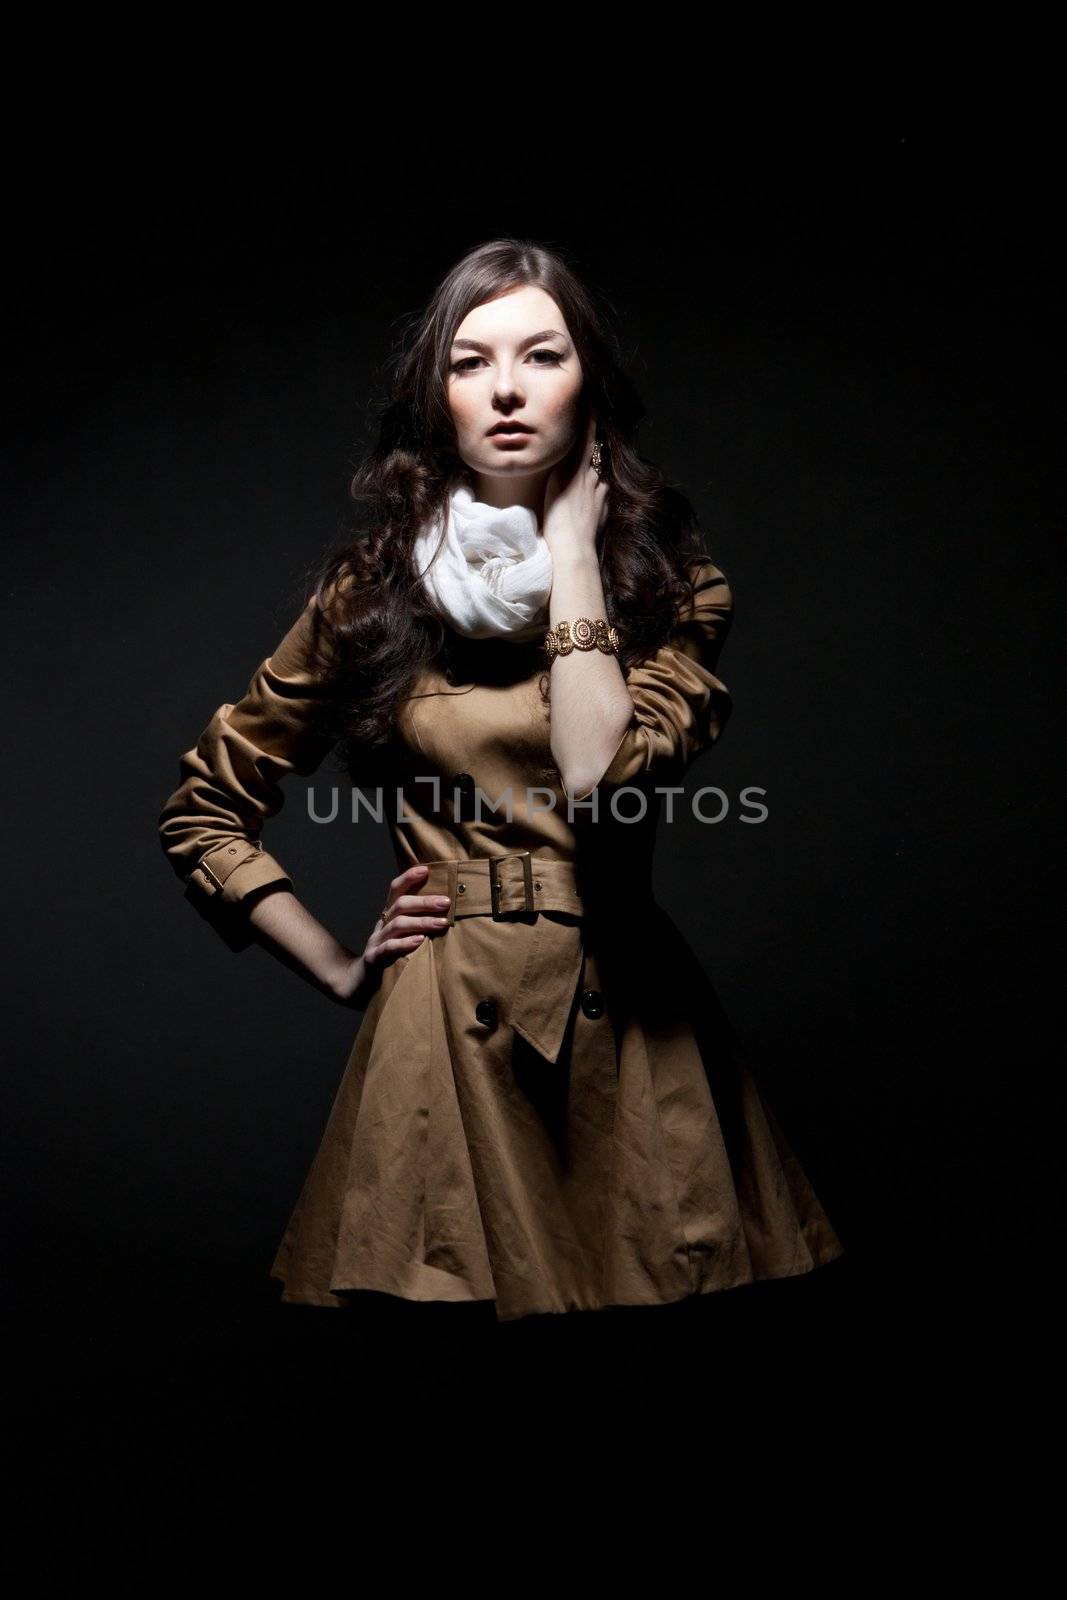 Fashion portrait ofwoman on dark background by nigerfoxy